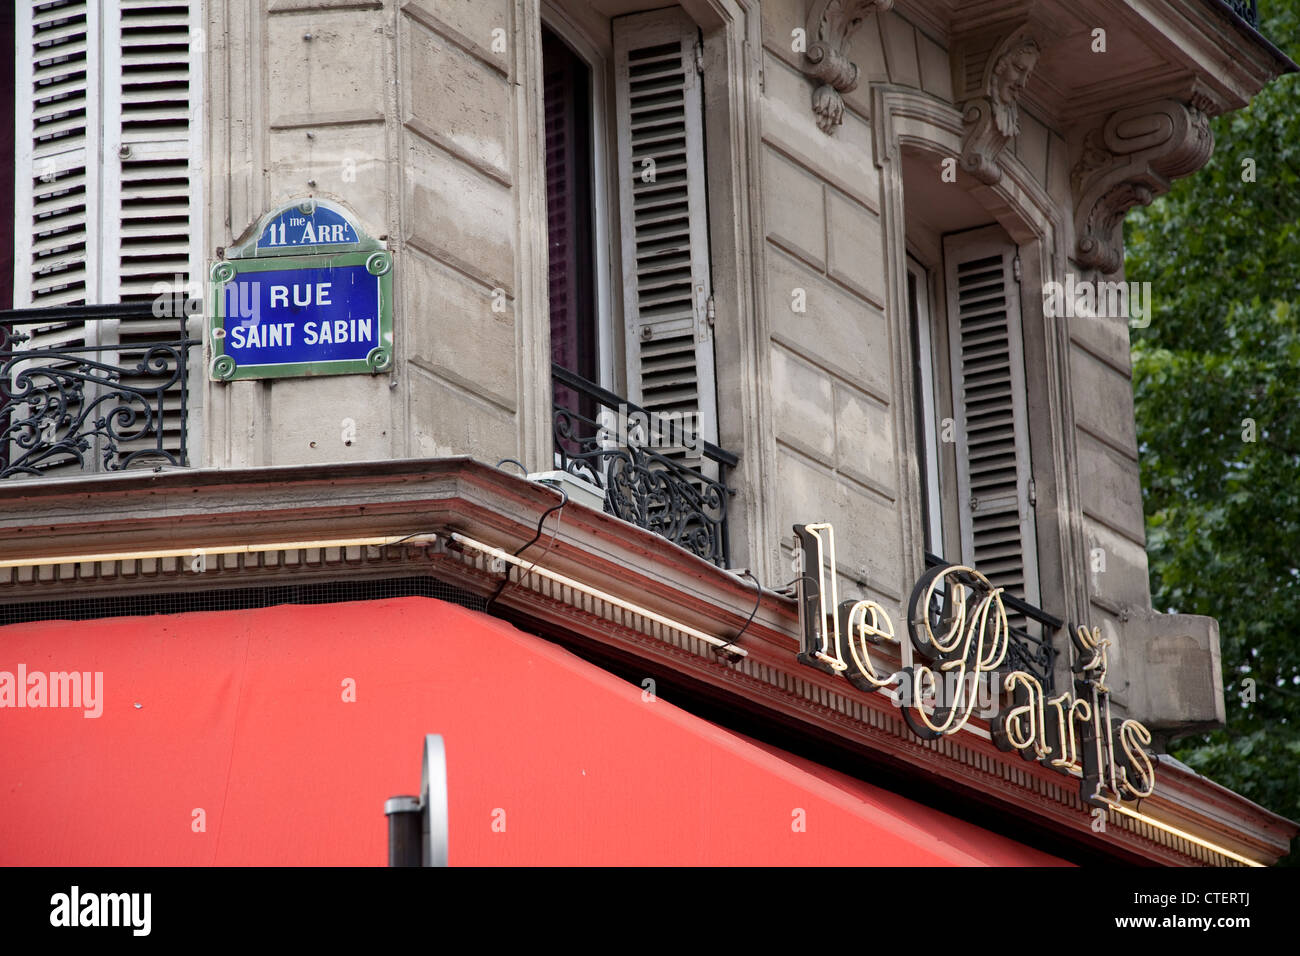 Le Paris a cafe on Rue Saint Sabin Stock Photo - Alamy